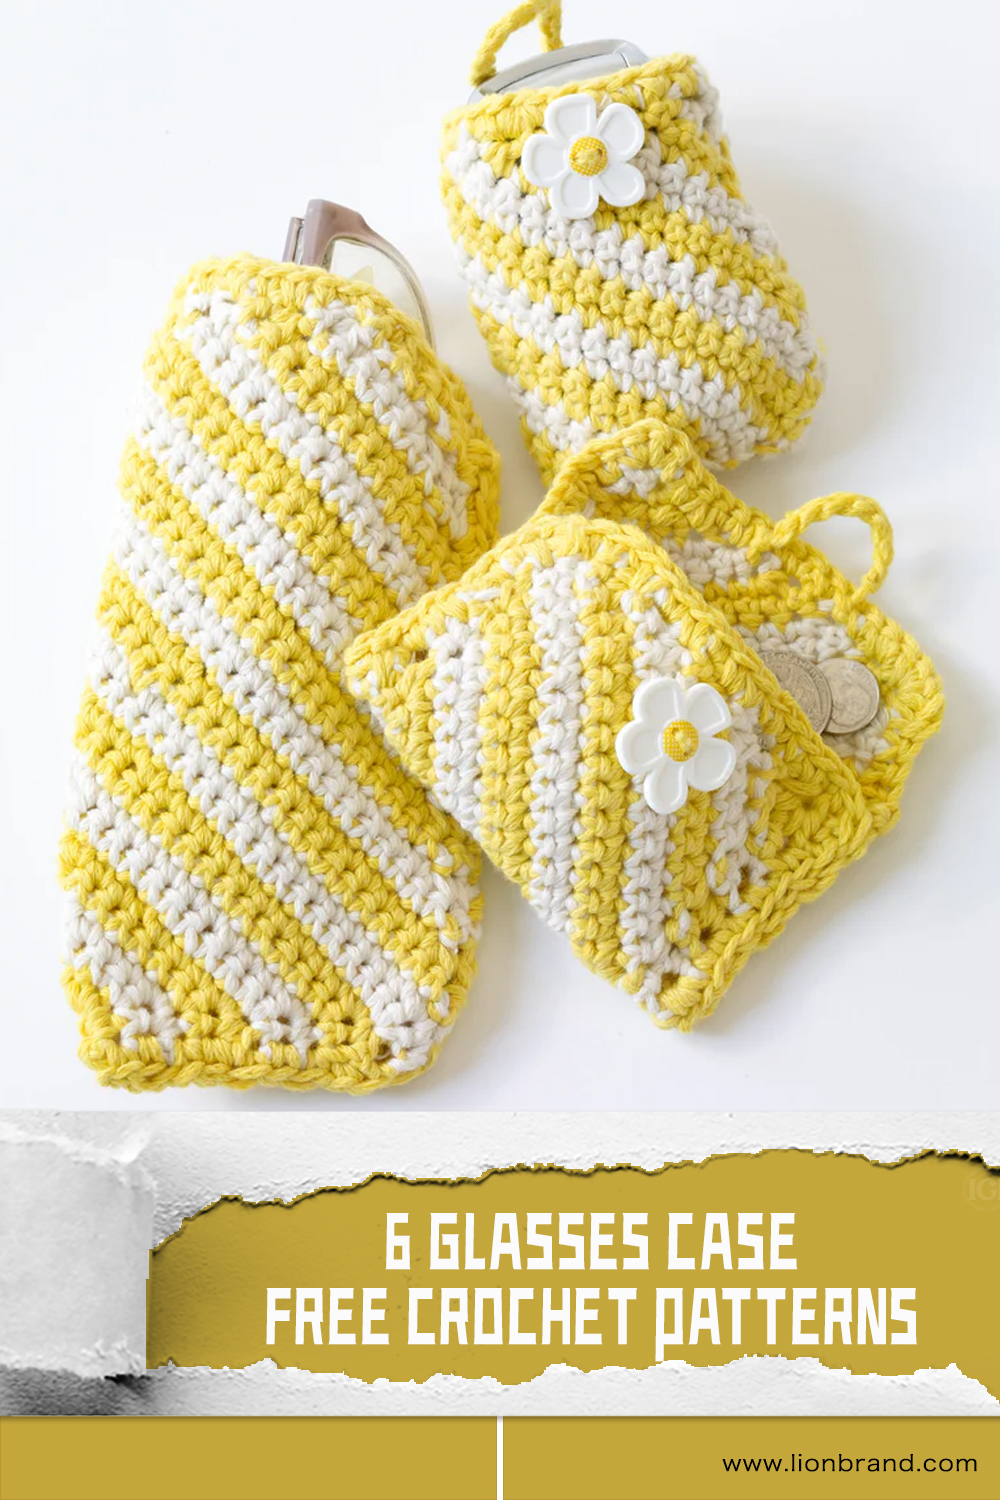 6 Crochet Glasses Case FREE Patterns